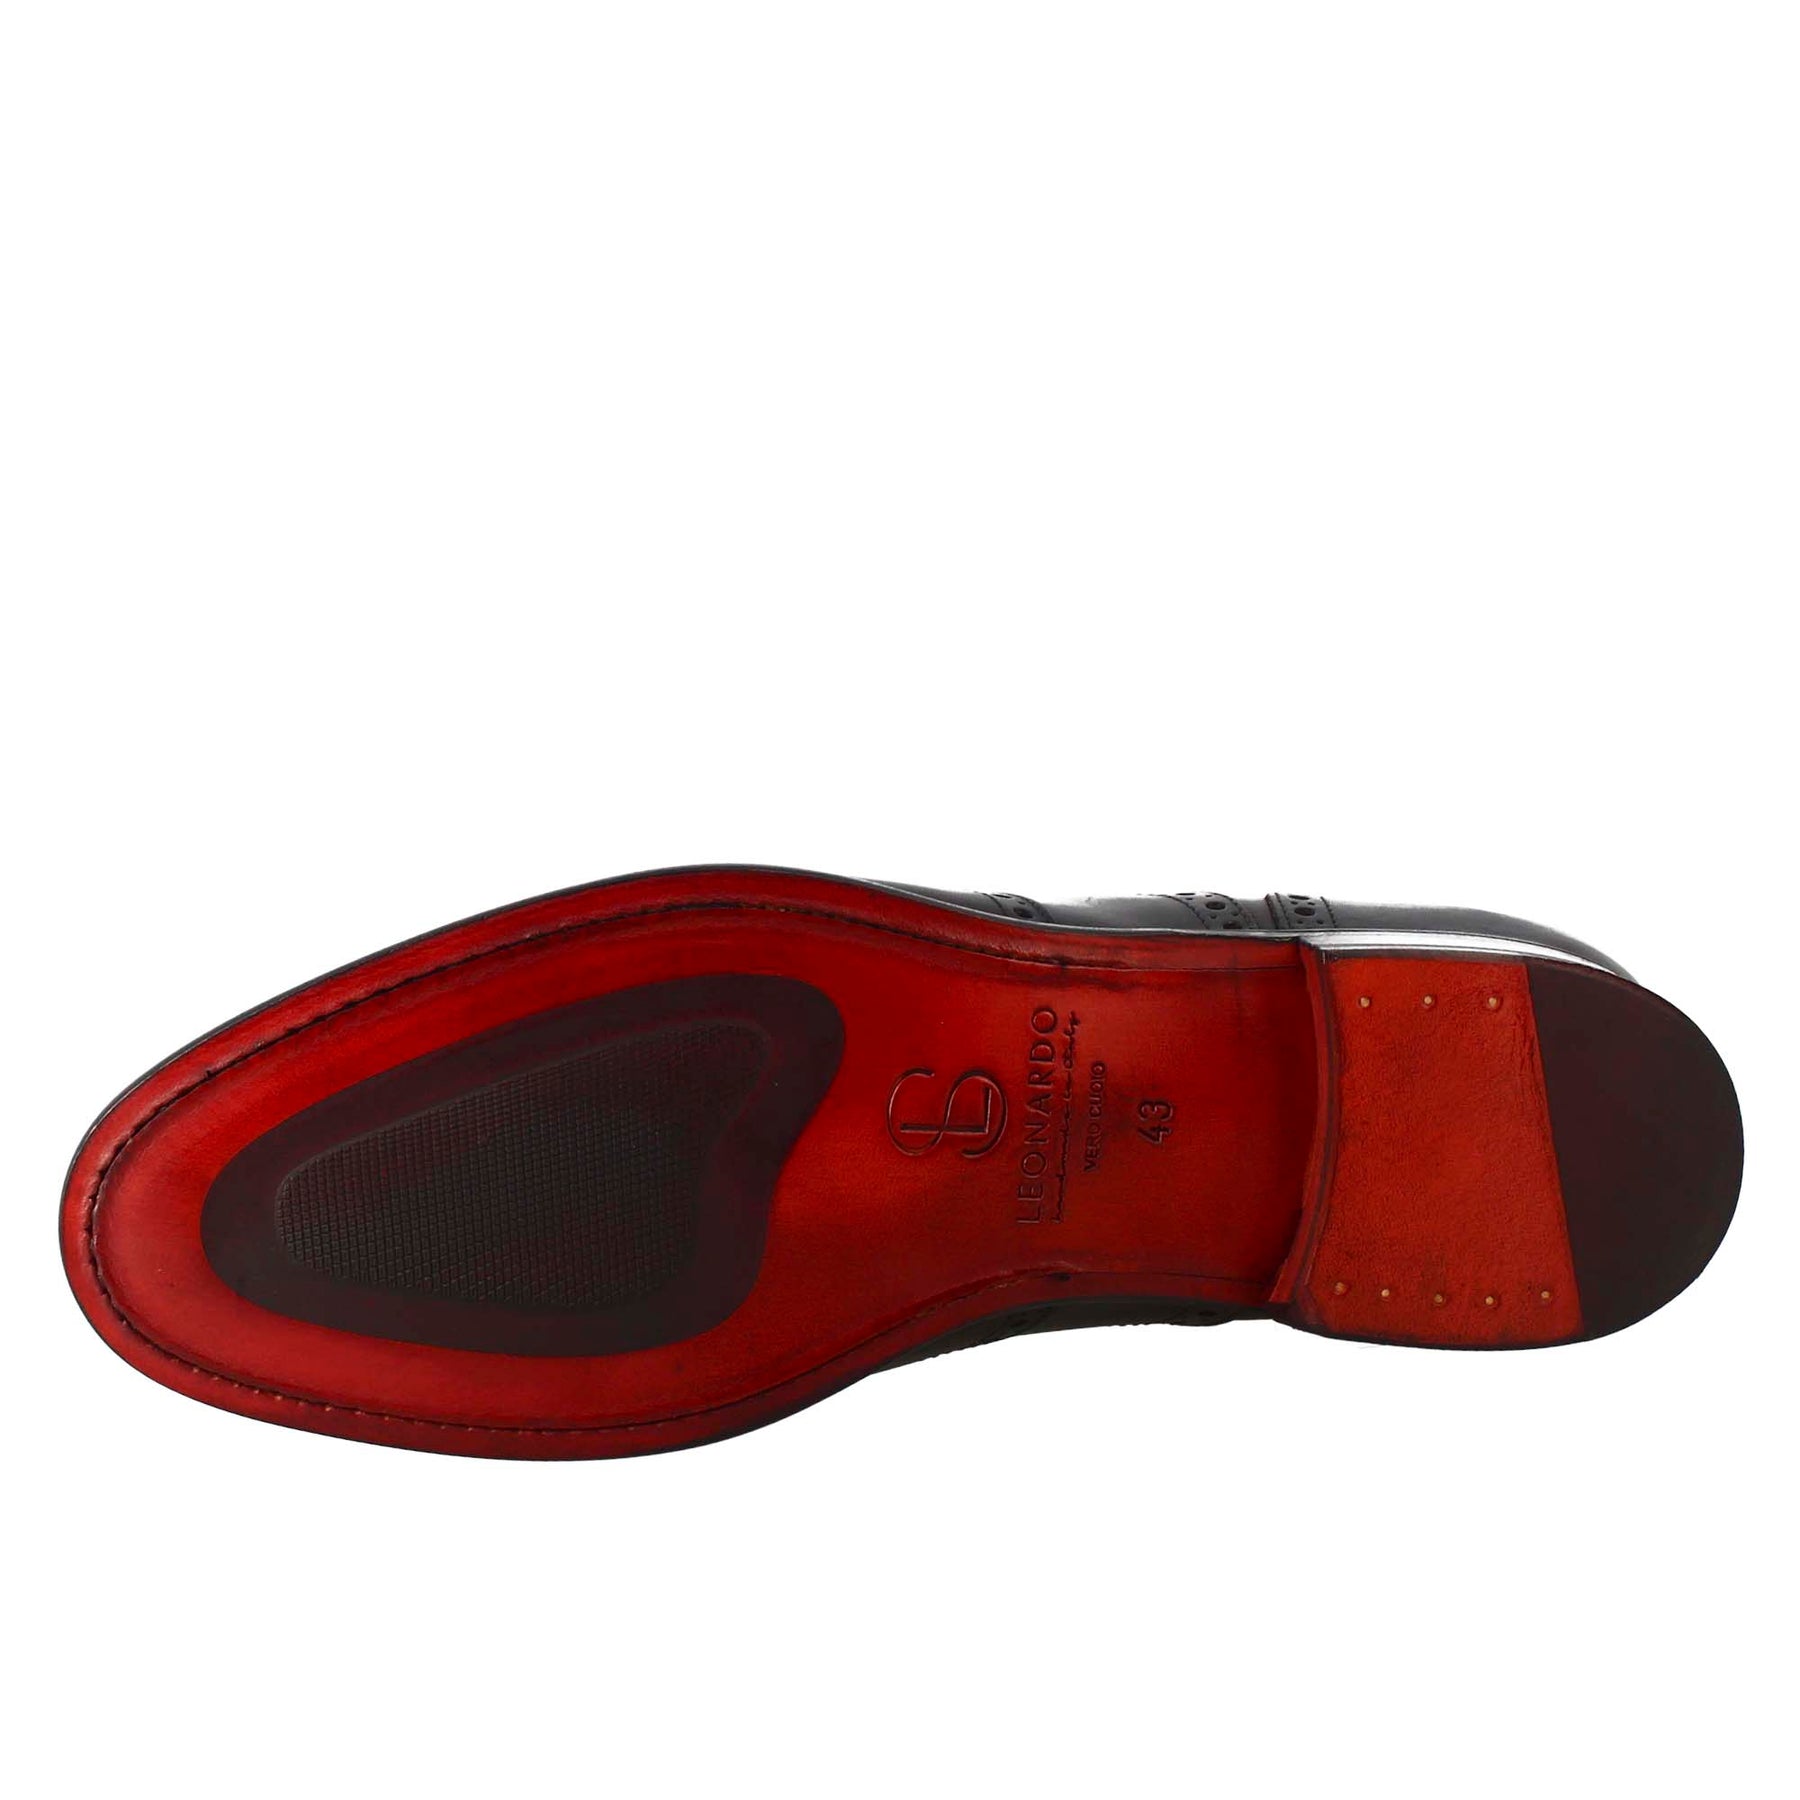 dress shoes red bottom louis vuitton shoes